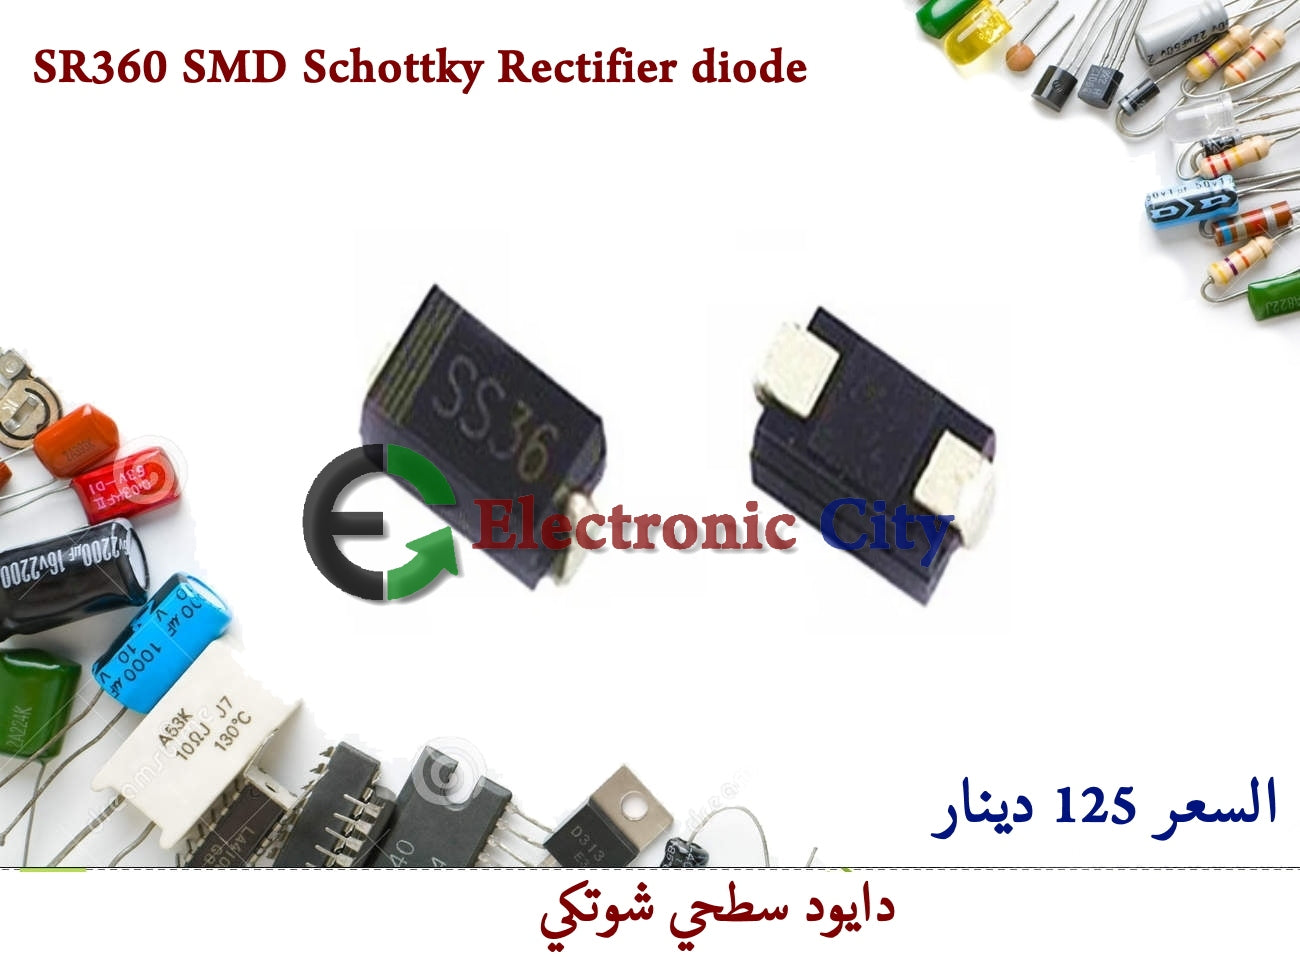 SR360 SMD Schottky Rectifier diode